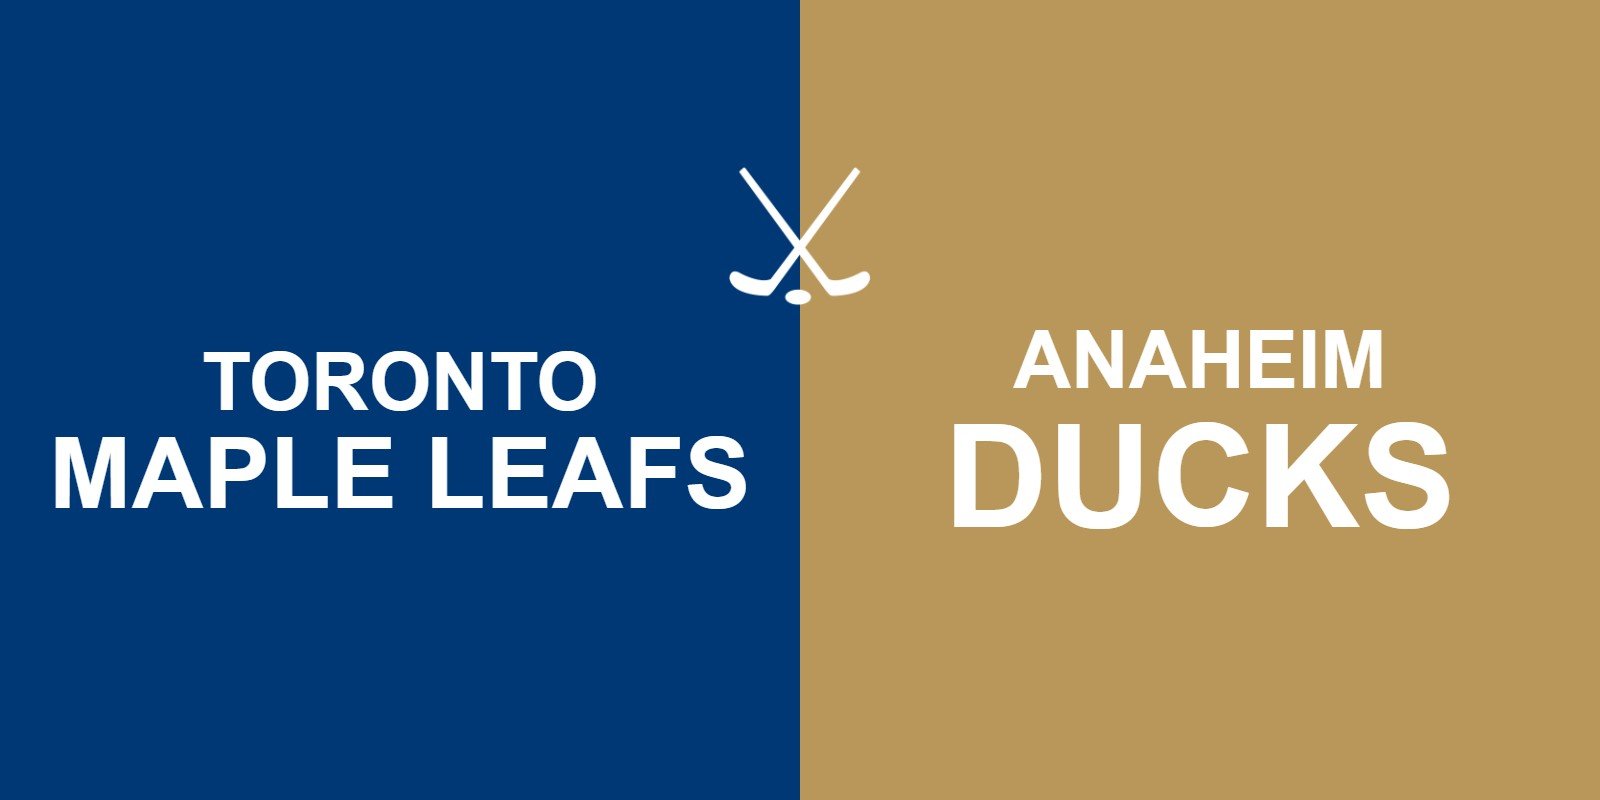 Maple Leafs vs Ducks